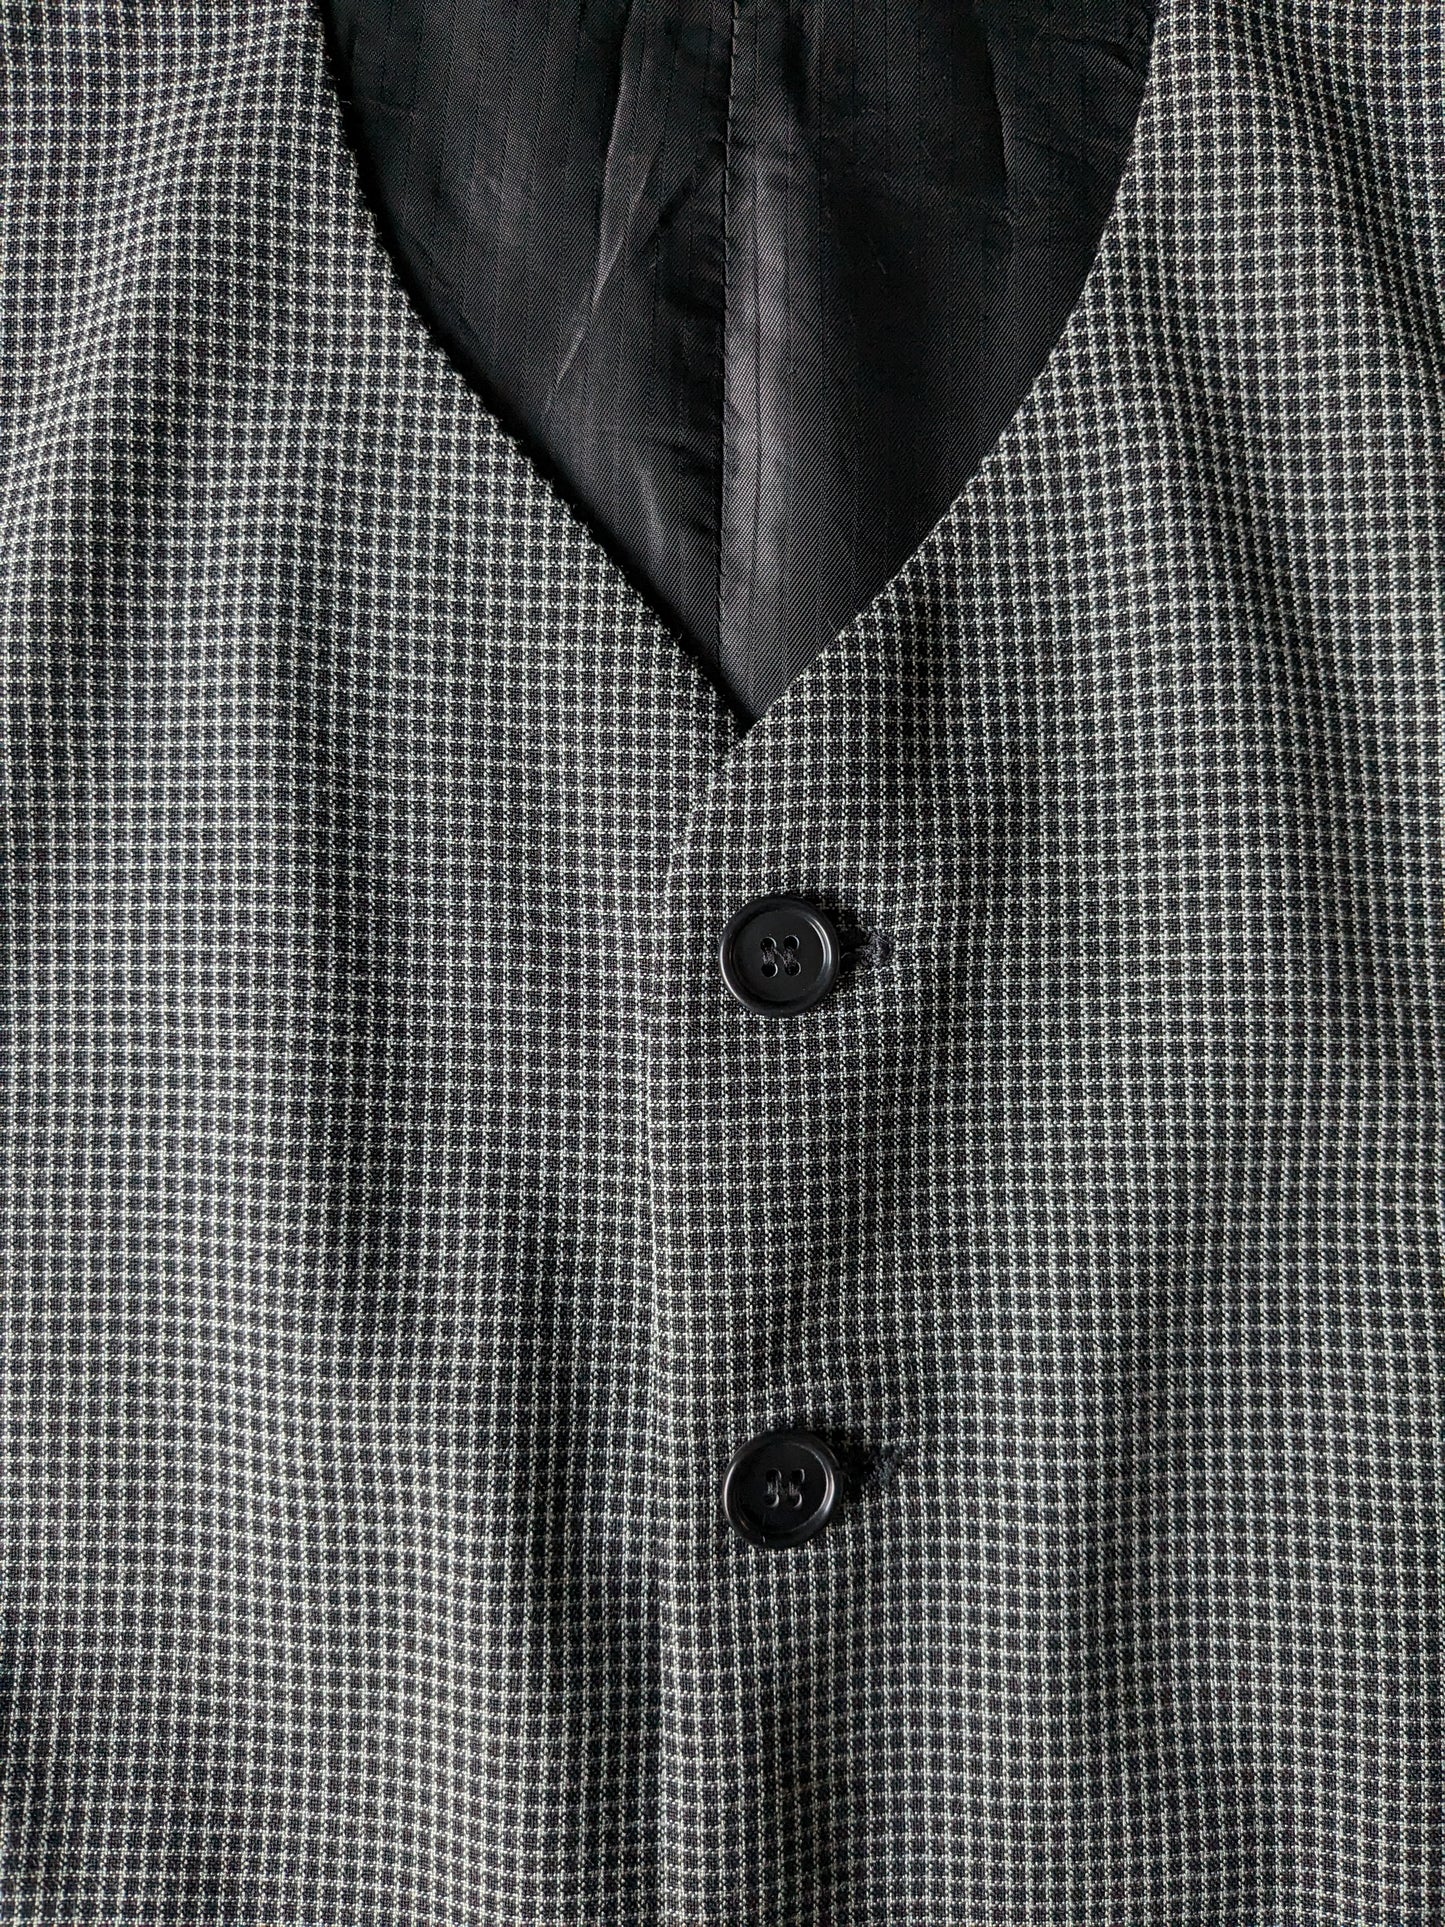 Vintage Angelo Litrico Wistcoat. Negro gris a cuadros. Tamaño 48 / M.